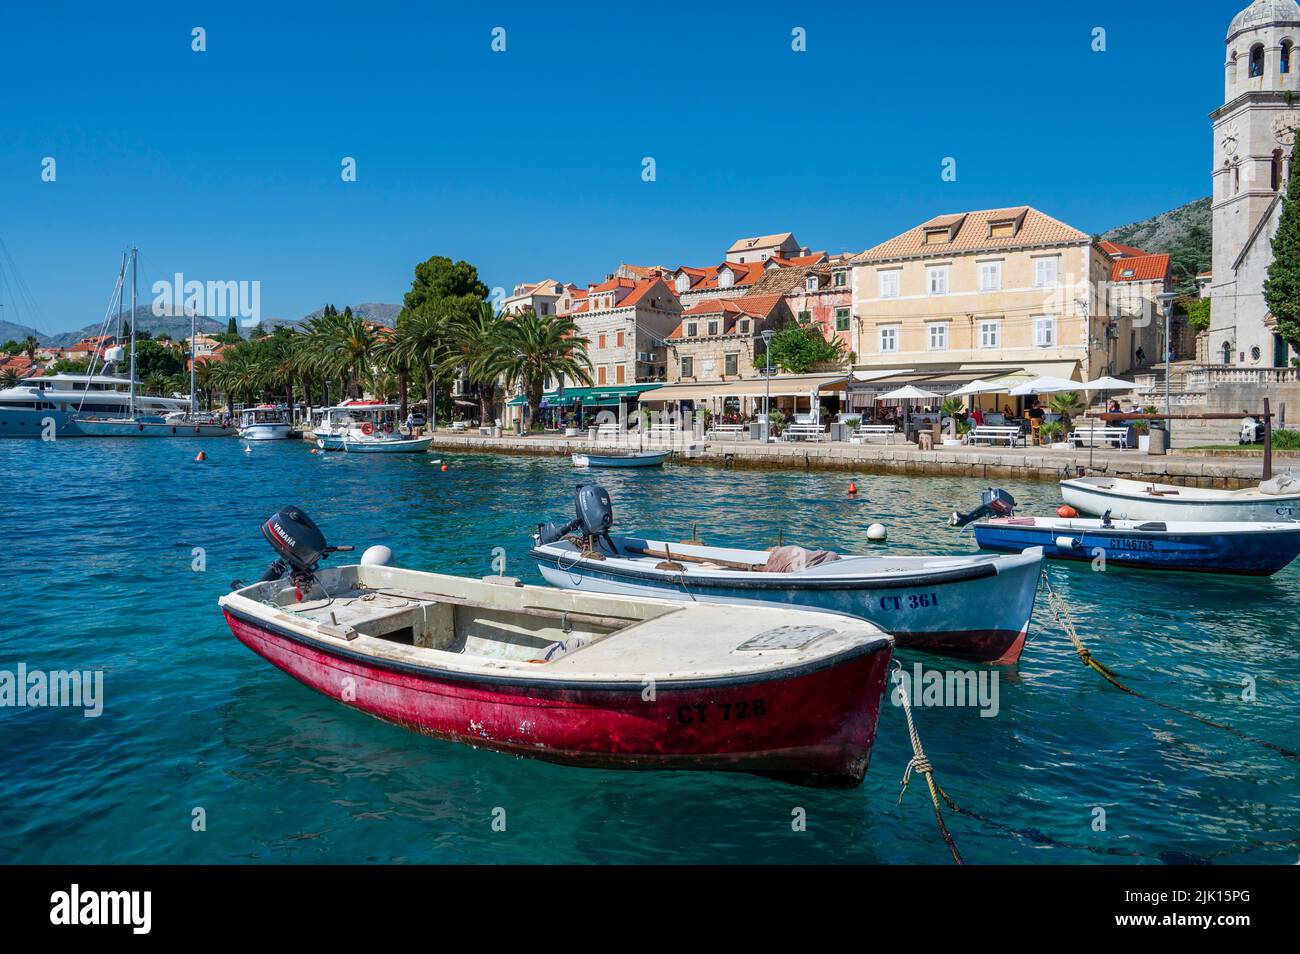 The coastal view of Cavtat on the Adriatic Sea, Cavtat, Dubrovnik Riviera, Croatia, Europe Stock Photo